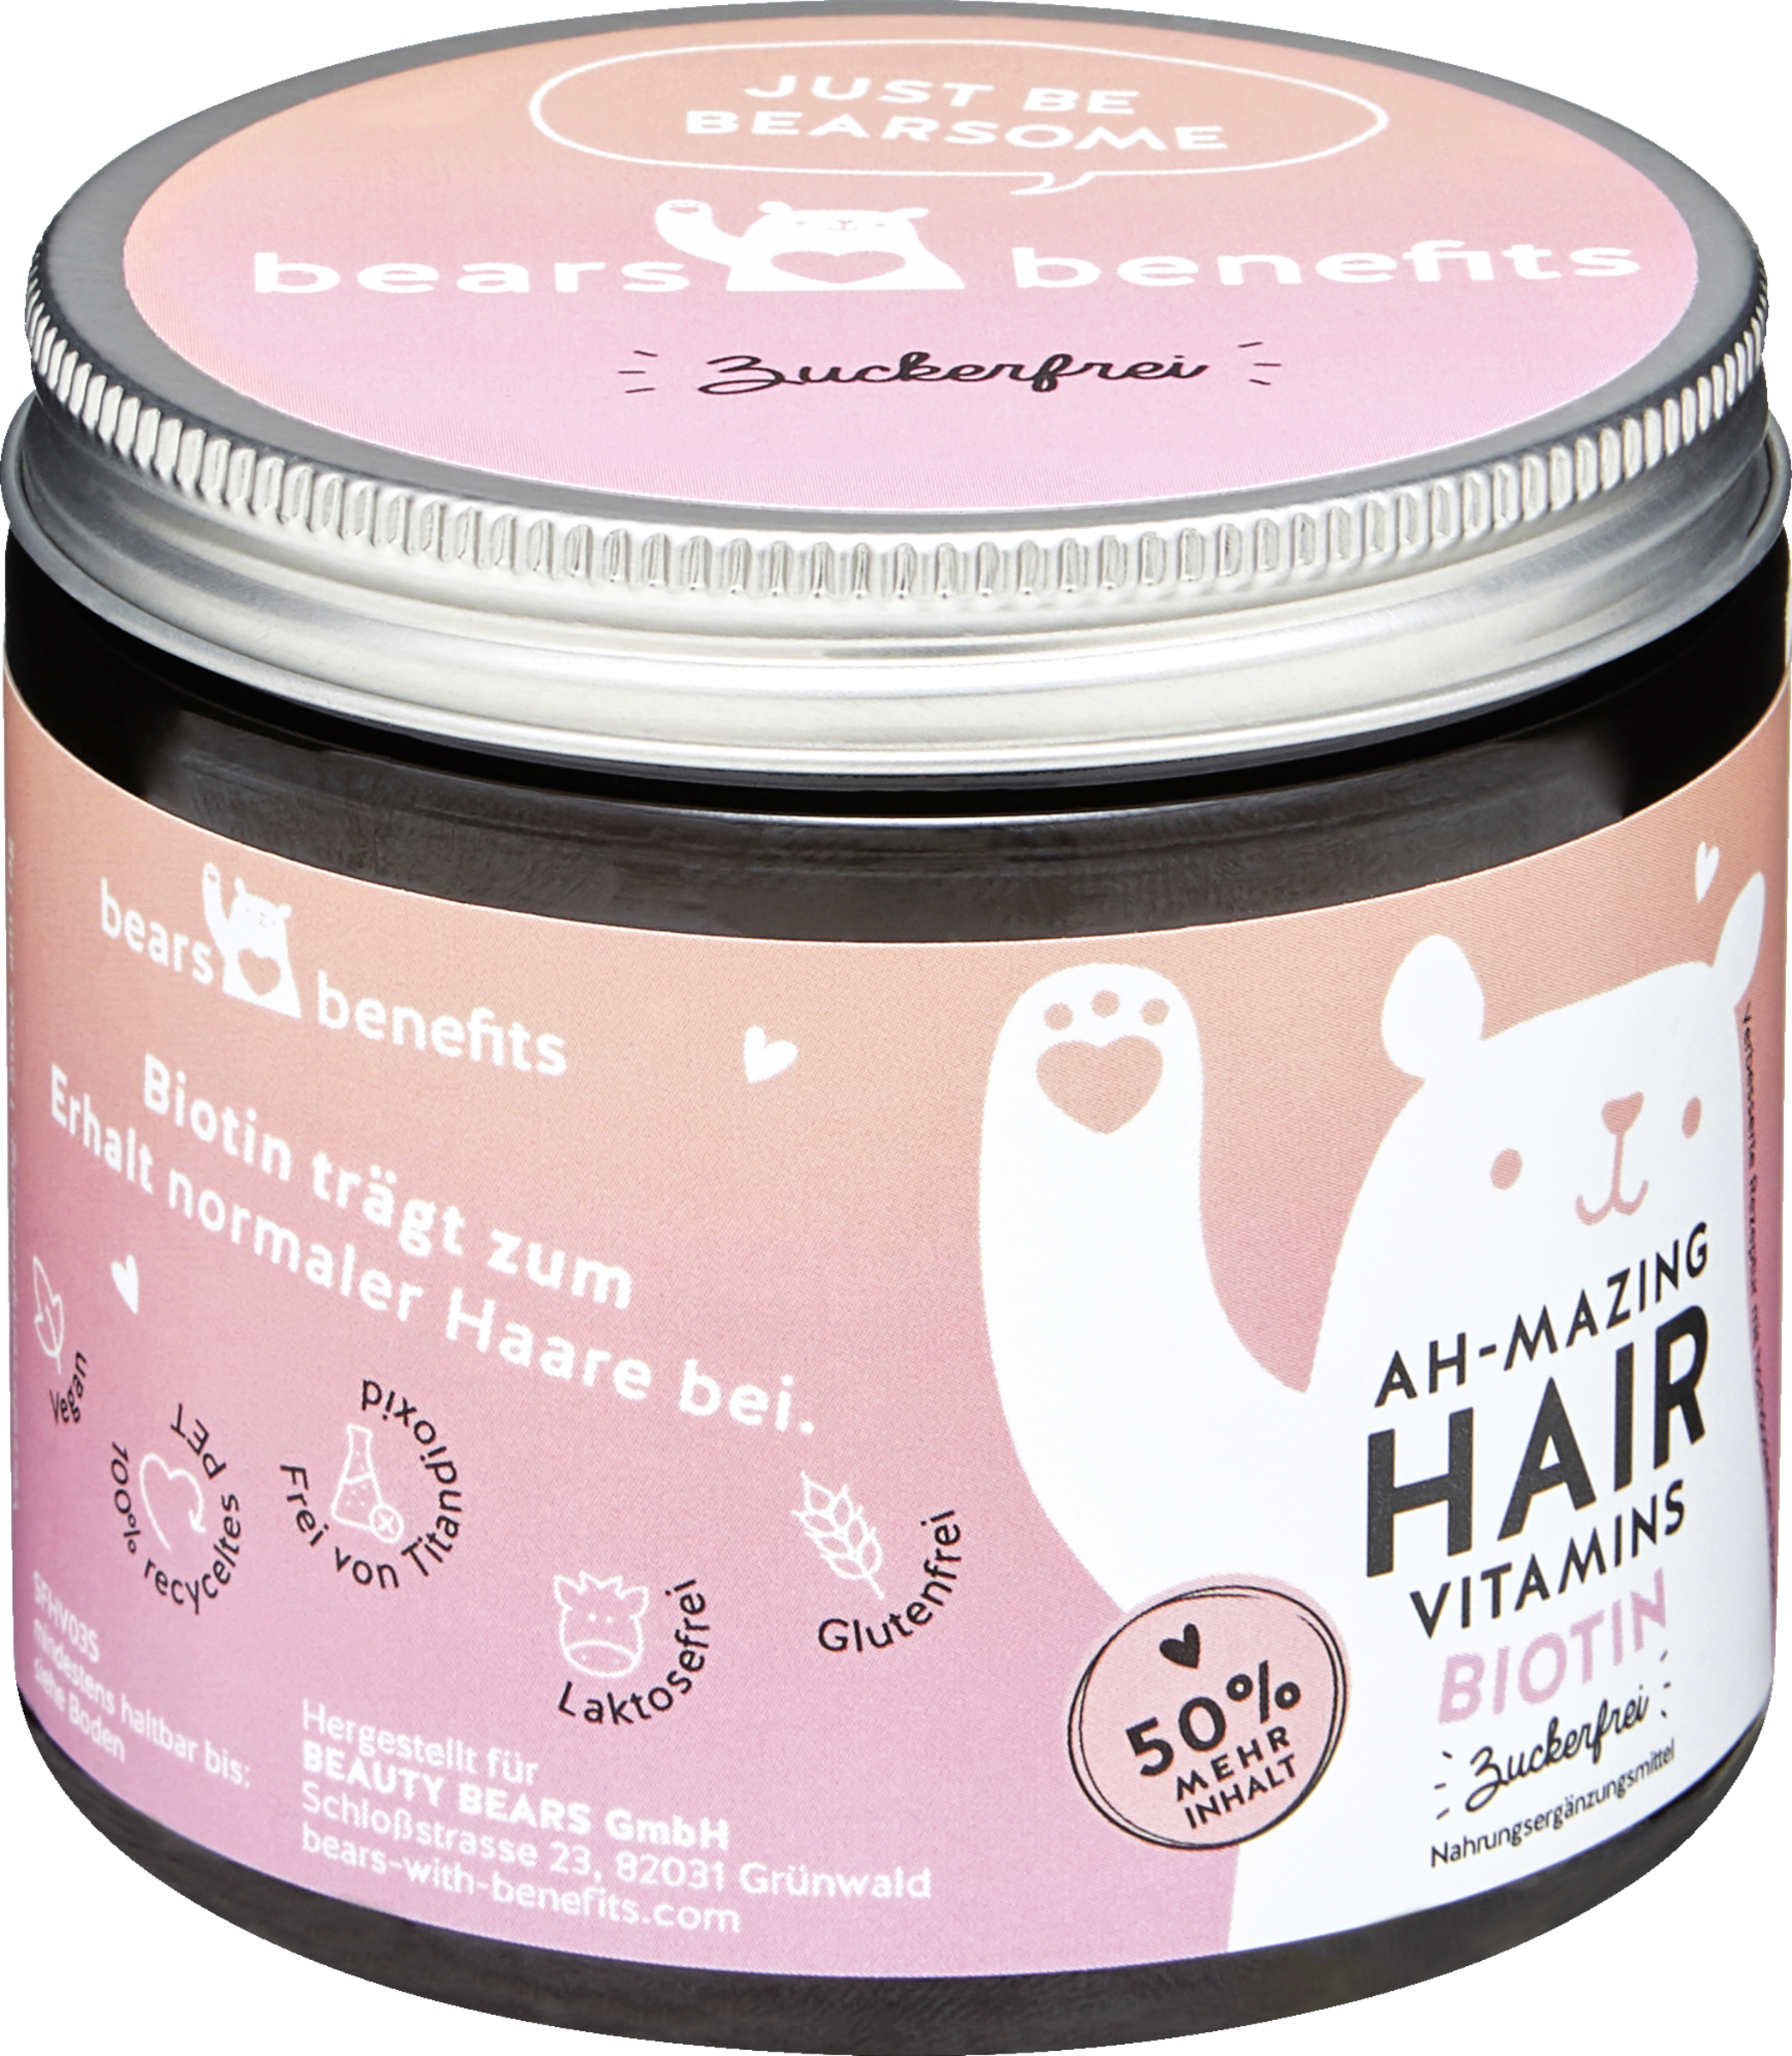 AH-Mazing Hair Vitamins Biotin Sugar-free gummy bears